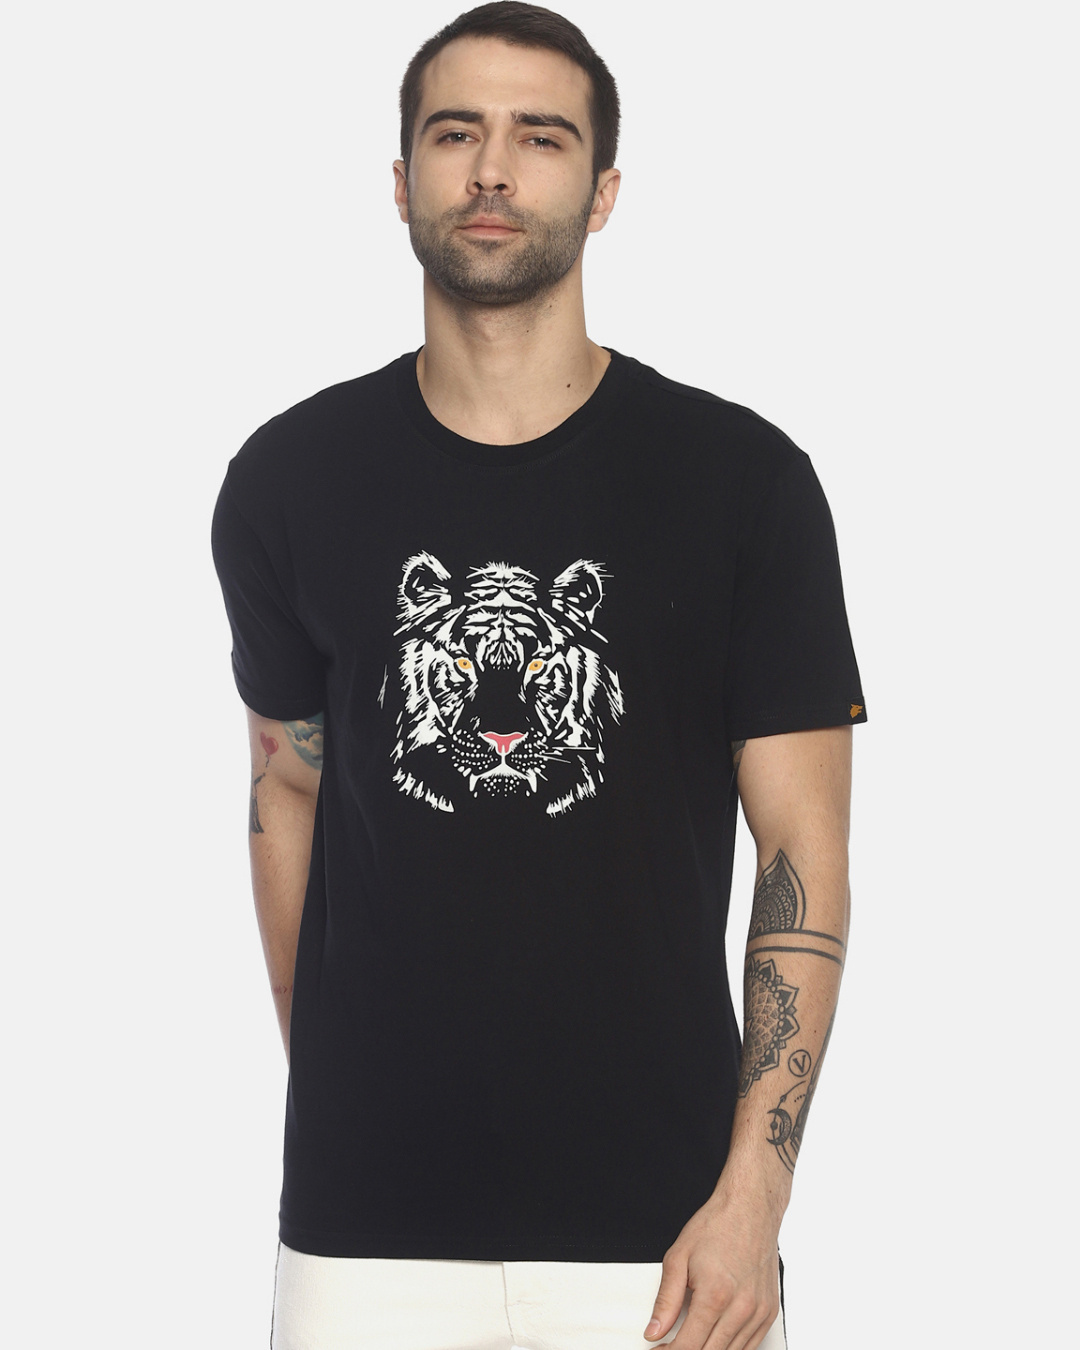 Buy Wolfpack Men's Black Glowing Tiger Printed T-Shirt Online at Bewakoof